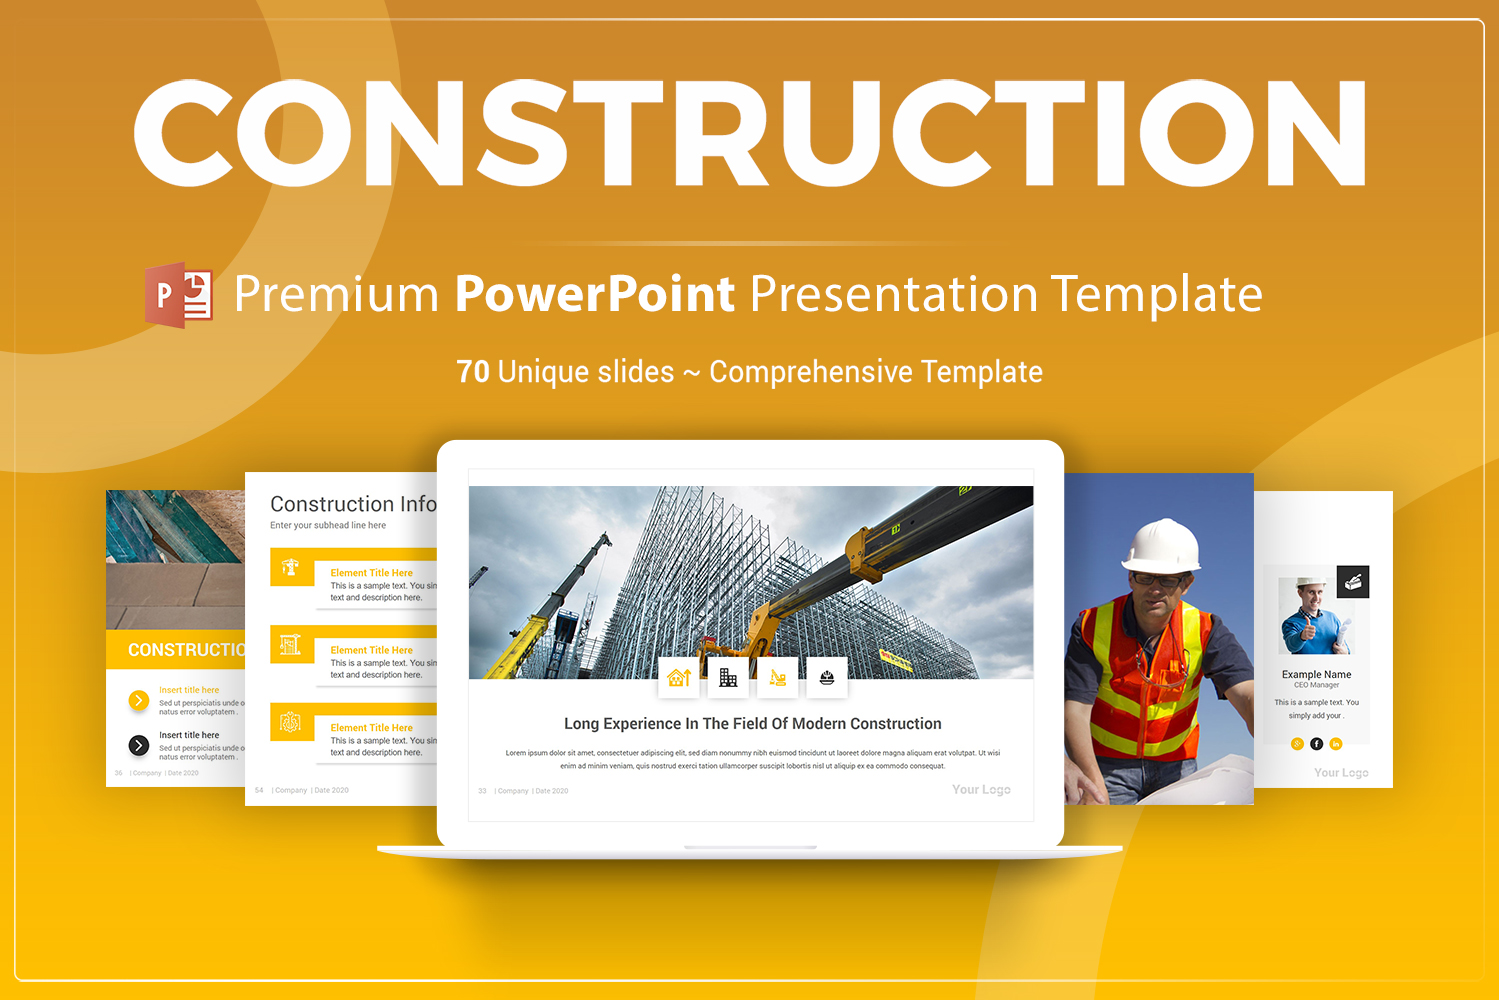 Building Construction PowerPoint Template